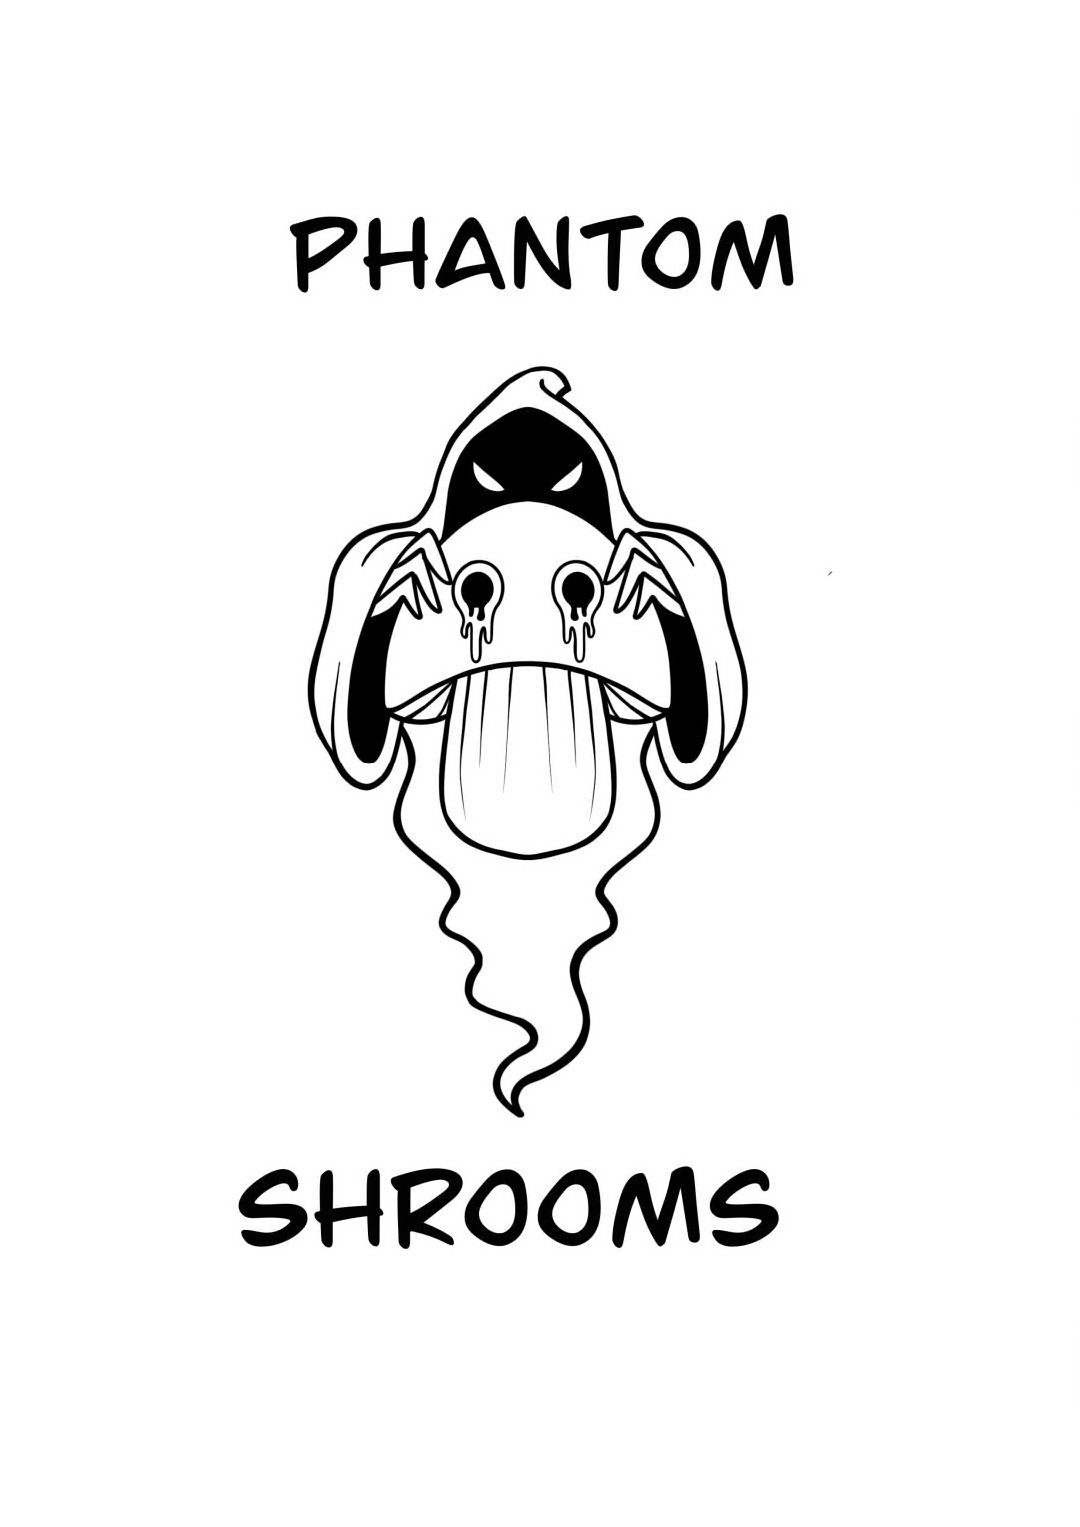  PHANTOM SHROOMS